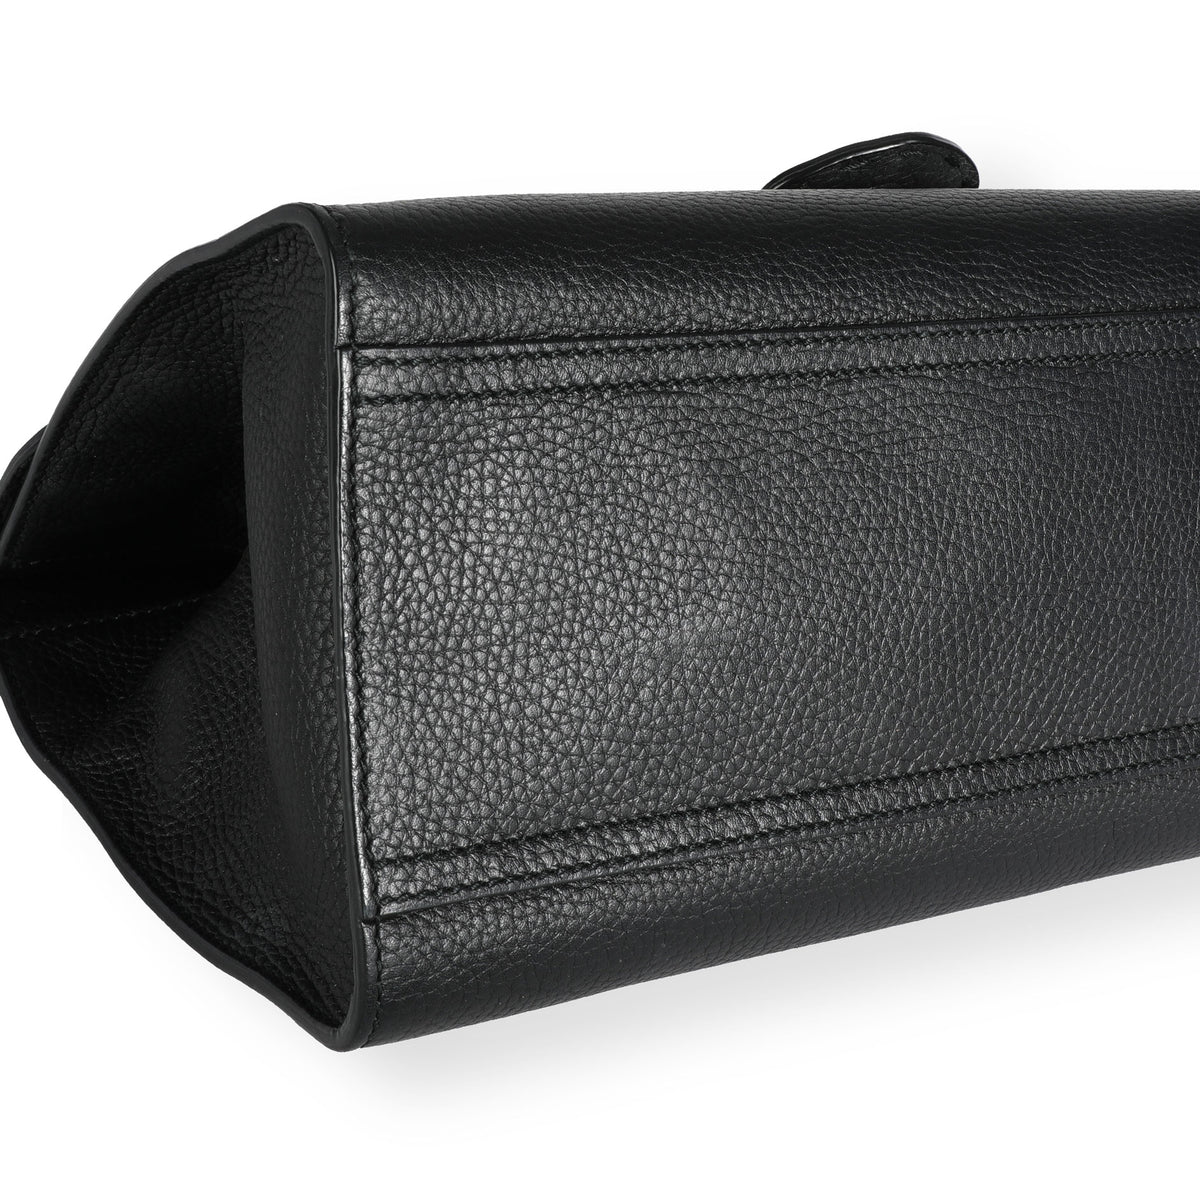 Gucci Black Calfskin GG Marmont Small Top Handle Bag